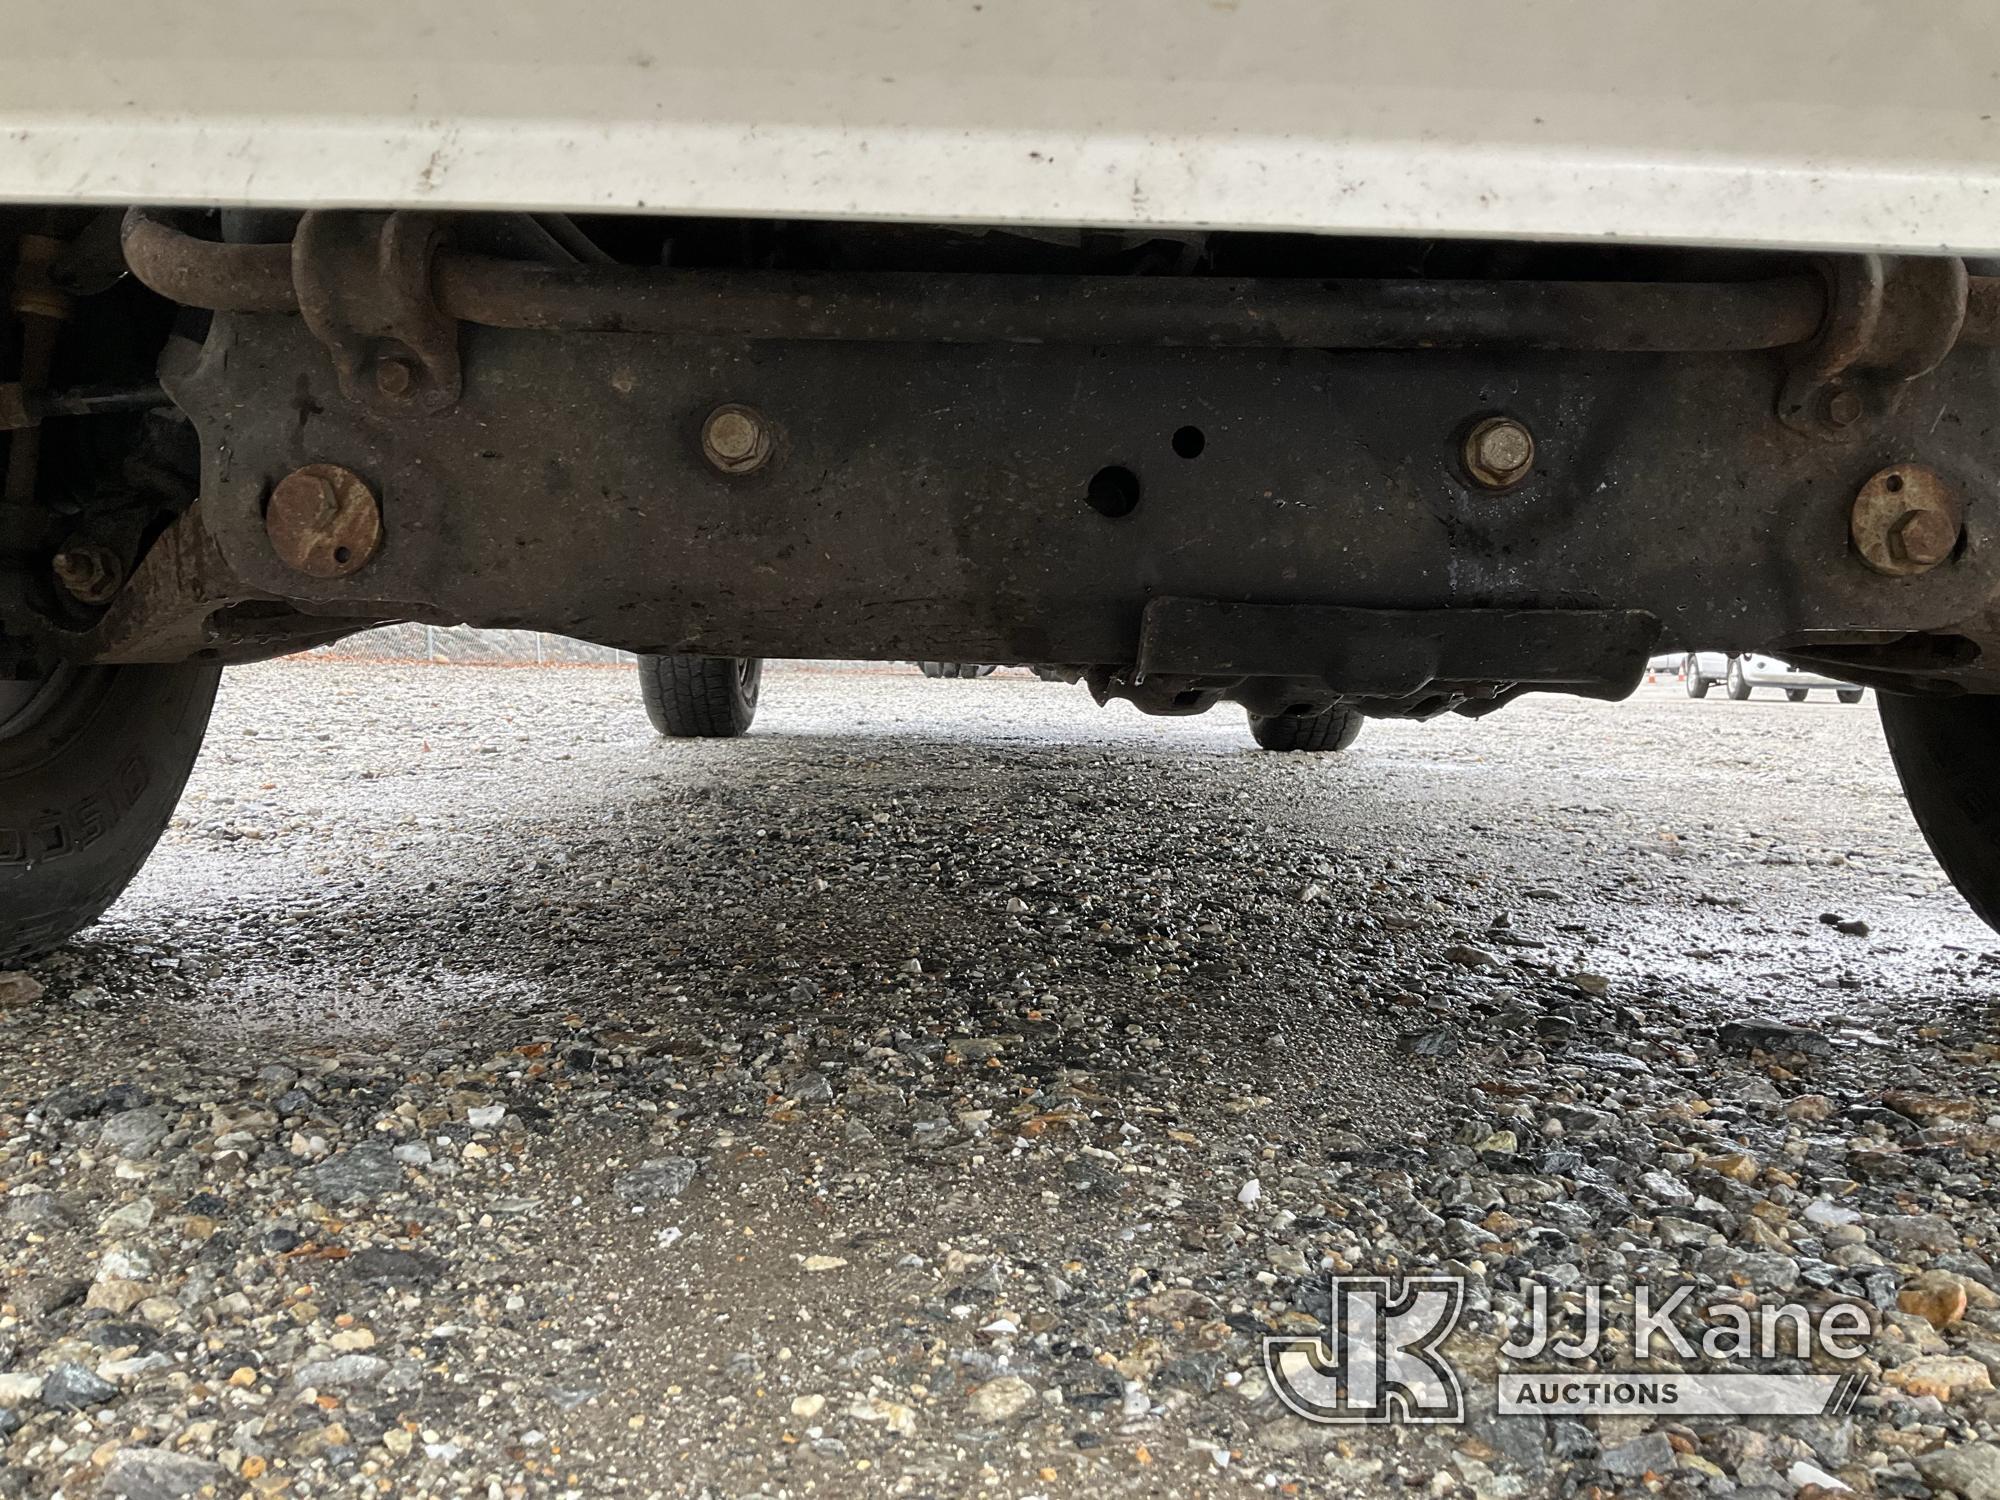 (Shrewsbury, MA) 2011 Dodge Dakota 4x4 Extended-Cab Pickup Truck Runs & Moves) (Rust Damage, Worn In